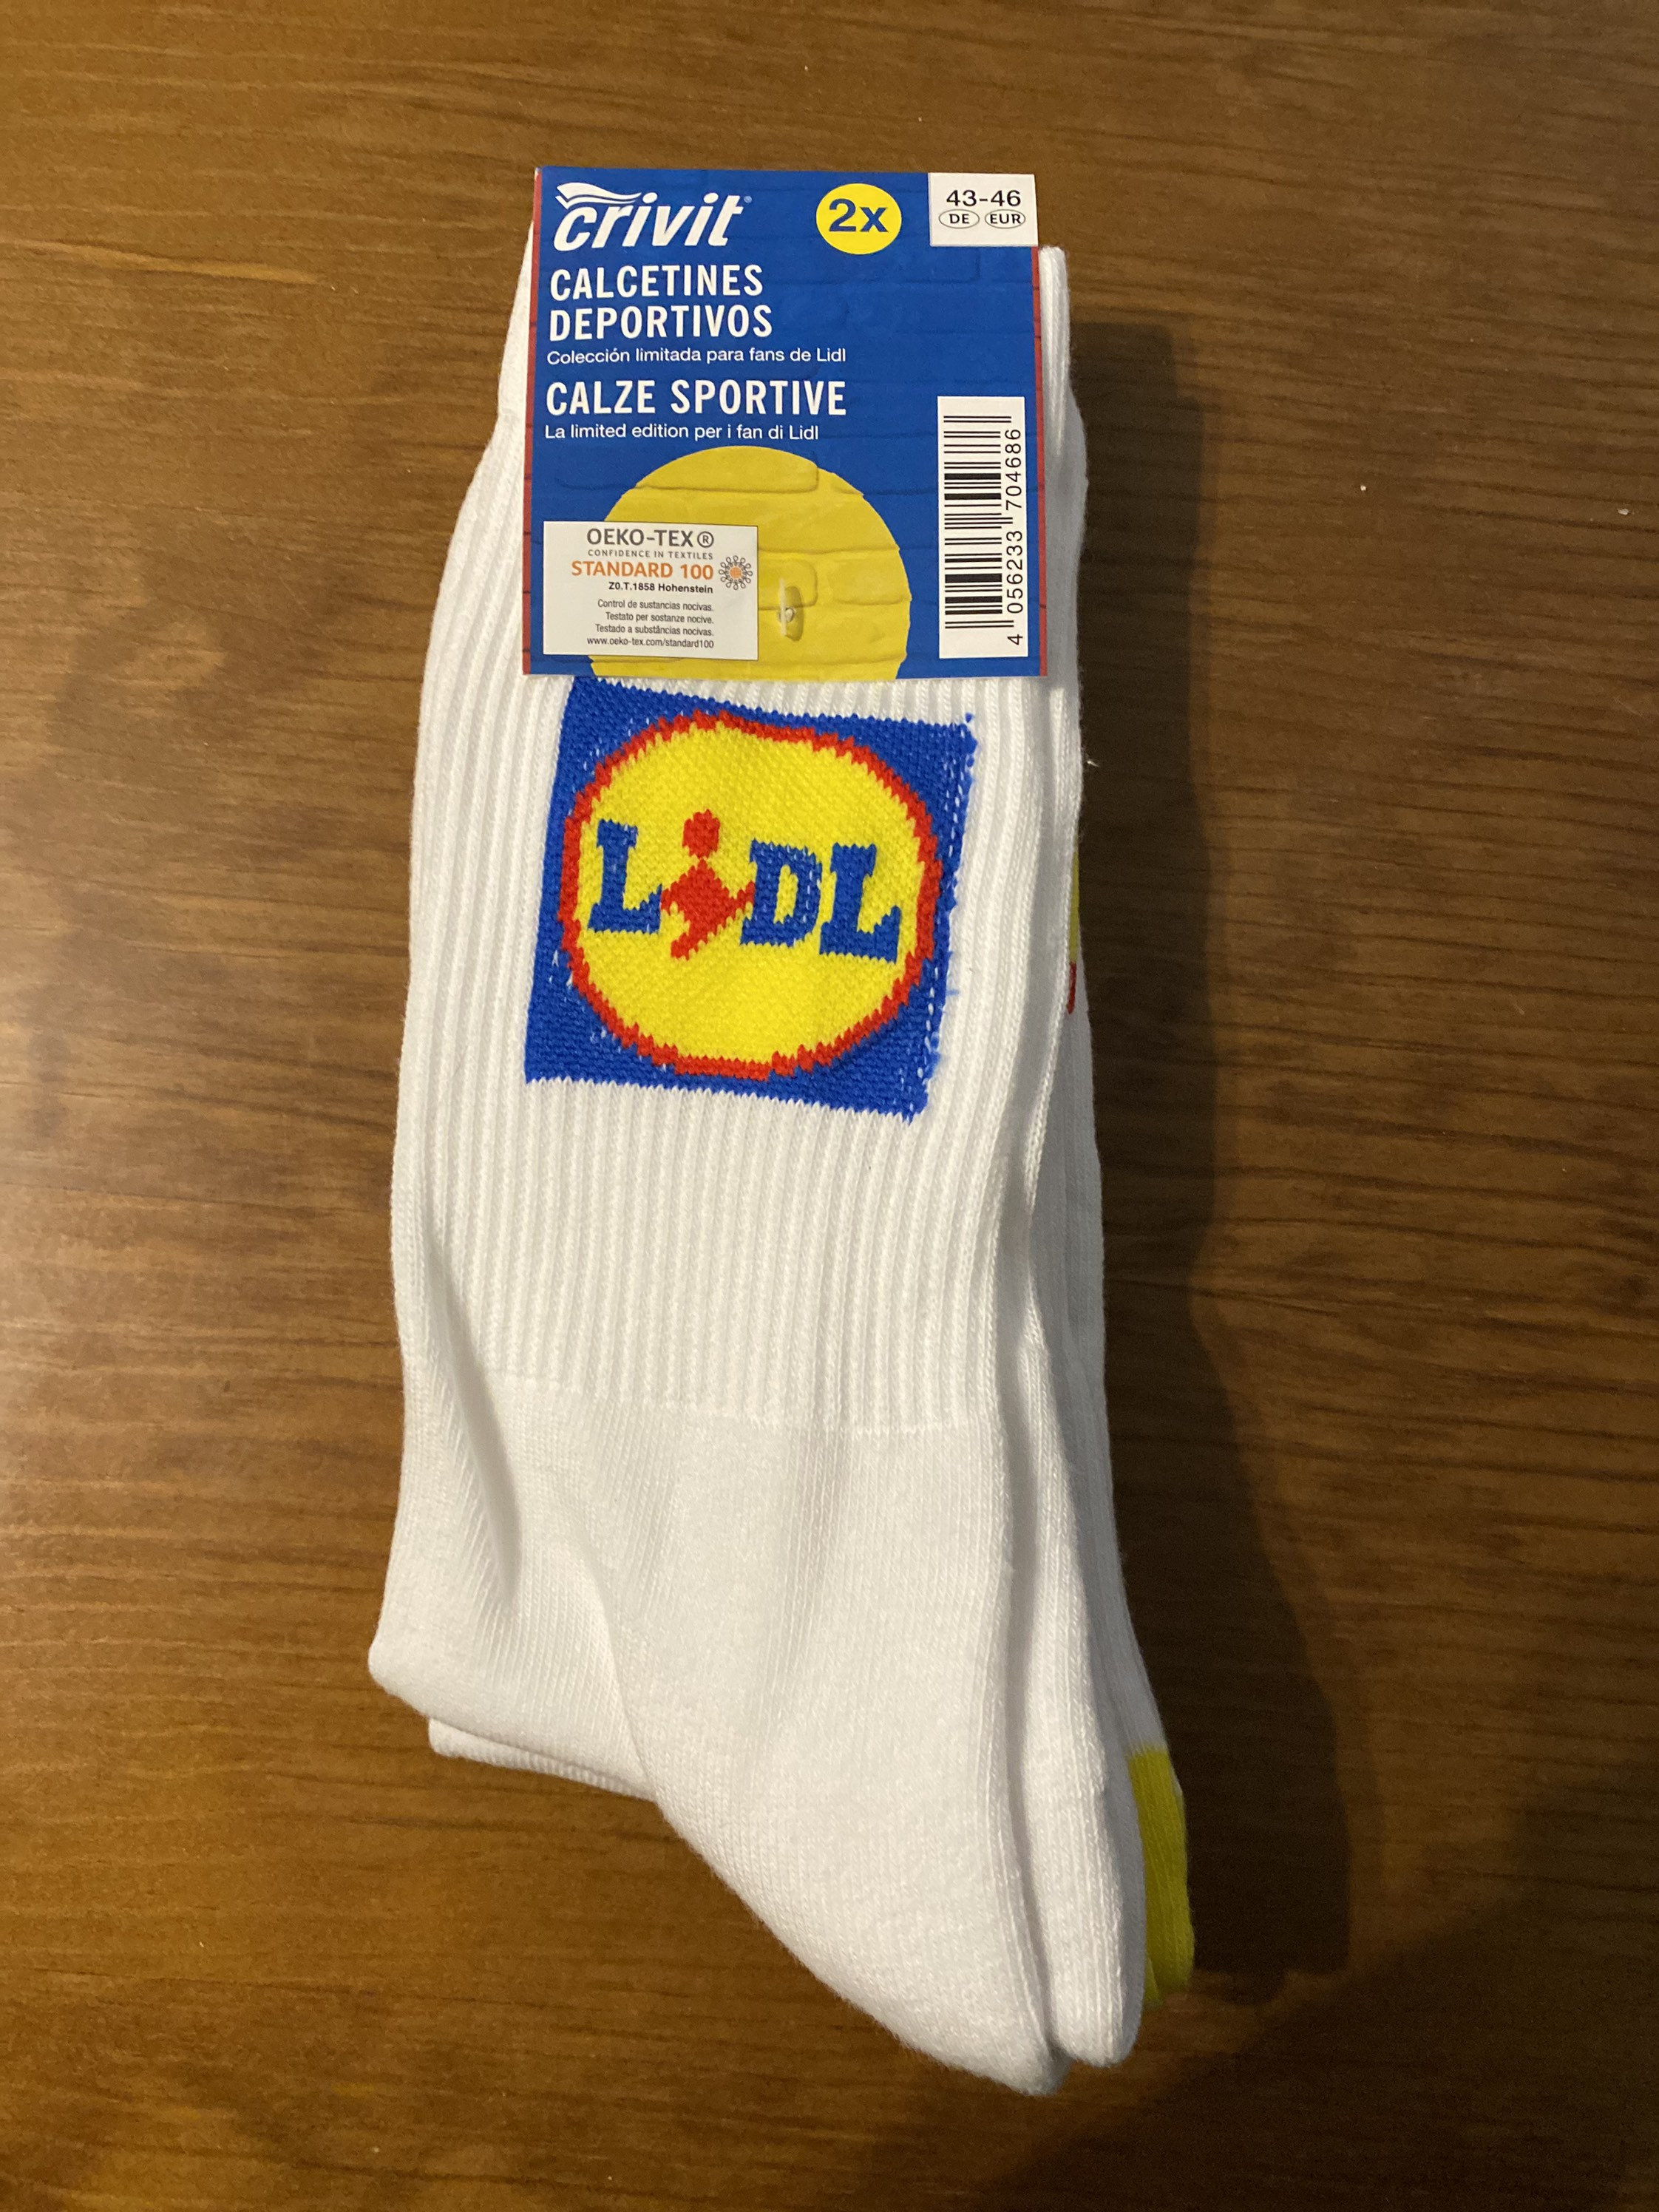 Hond Communisme ontgrendelen 2 paar Lidl sokken Limited Edition schoenen 43/46 maat uk - Etsy Nederland